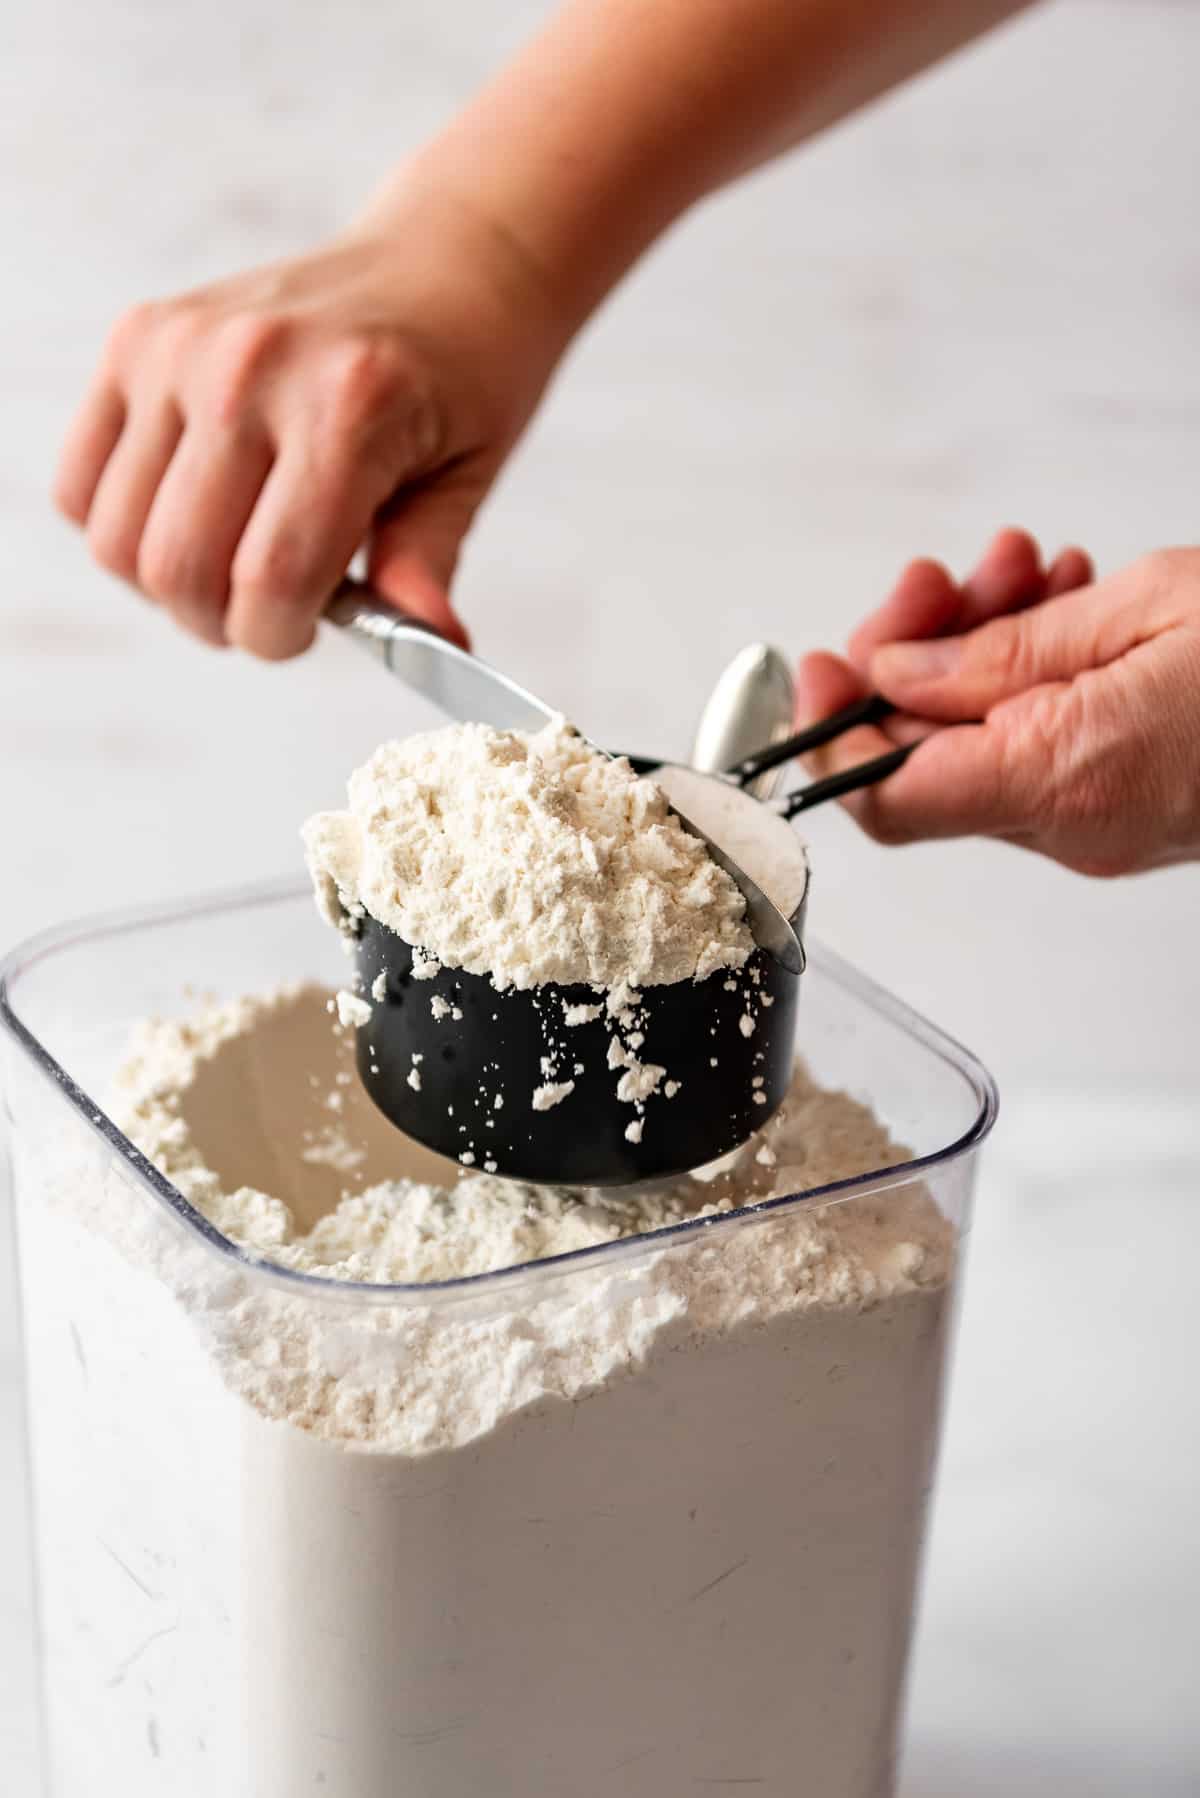 https://houseofnasheats.com/wp-content/uploads/2021/11/How-to-Measure-Flour-3.jpg